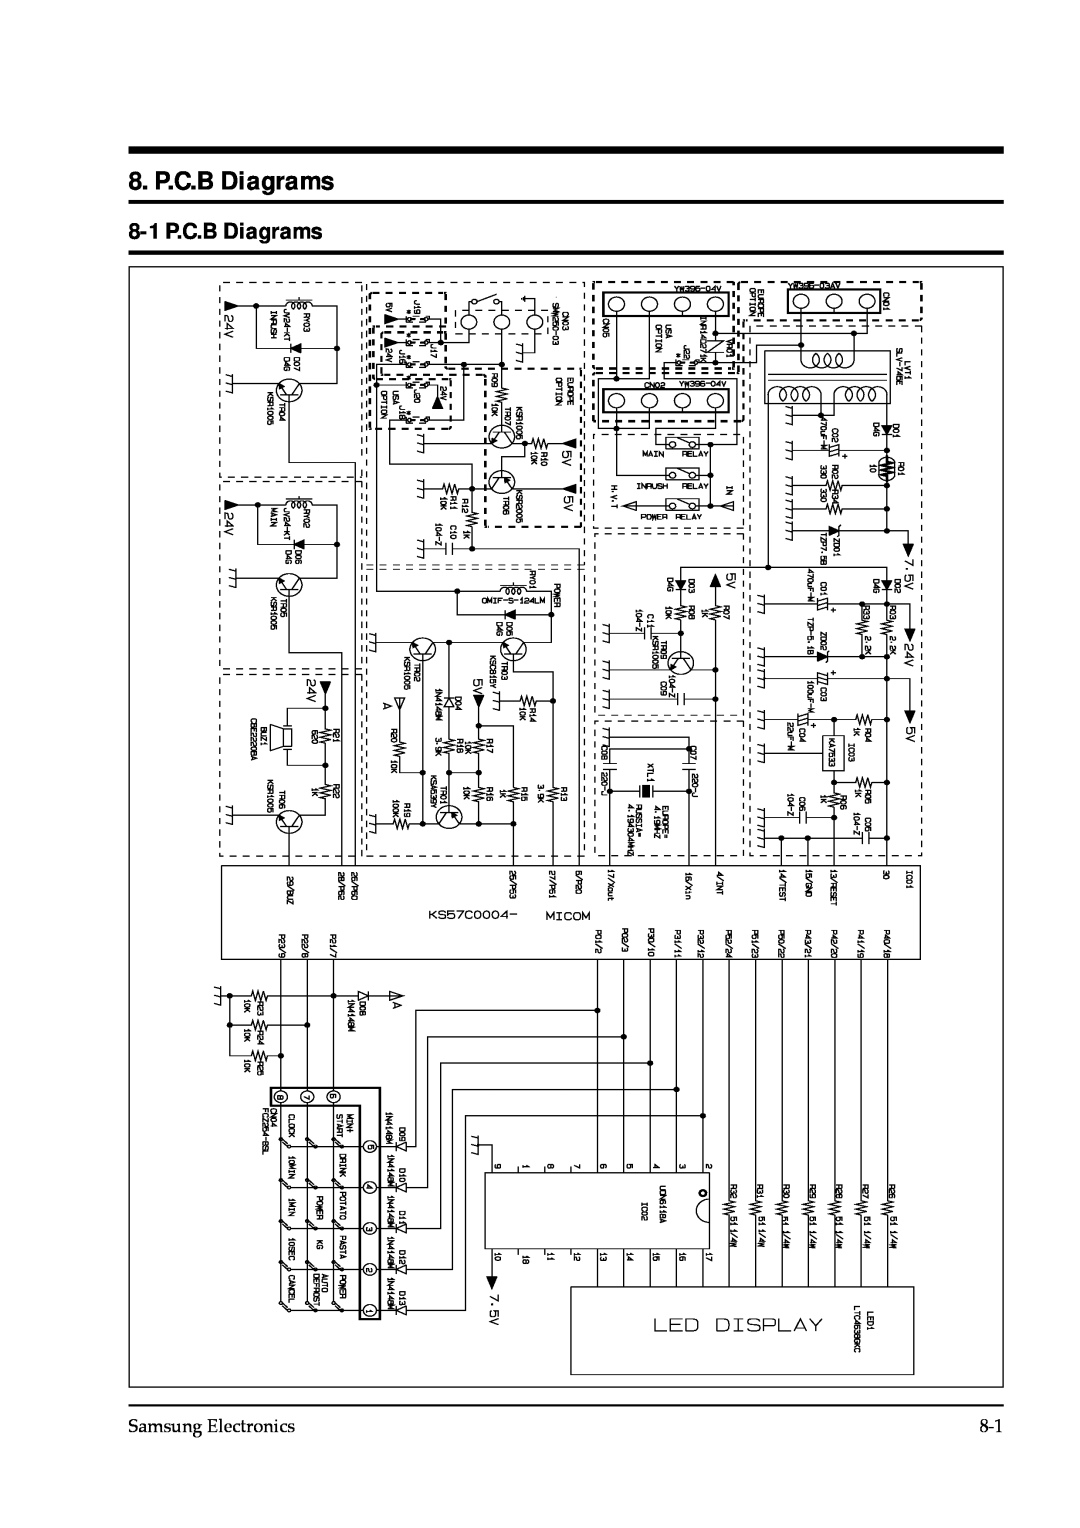 Samsung CE745GR service manual 8. P.C.B Diagrams, 8-1 P.C.B Diagrams 